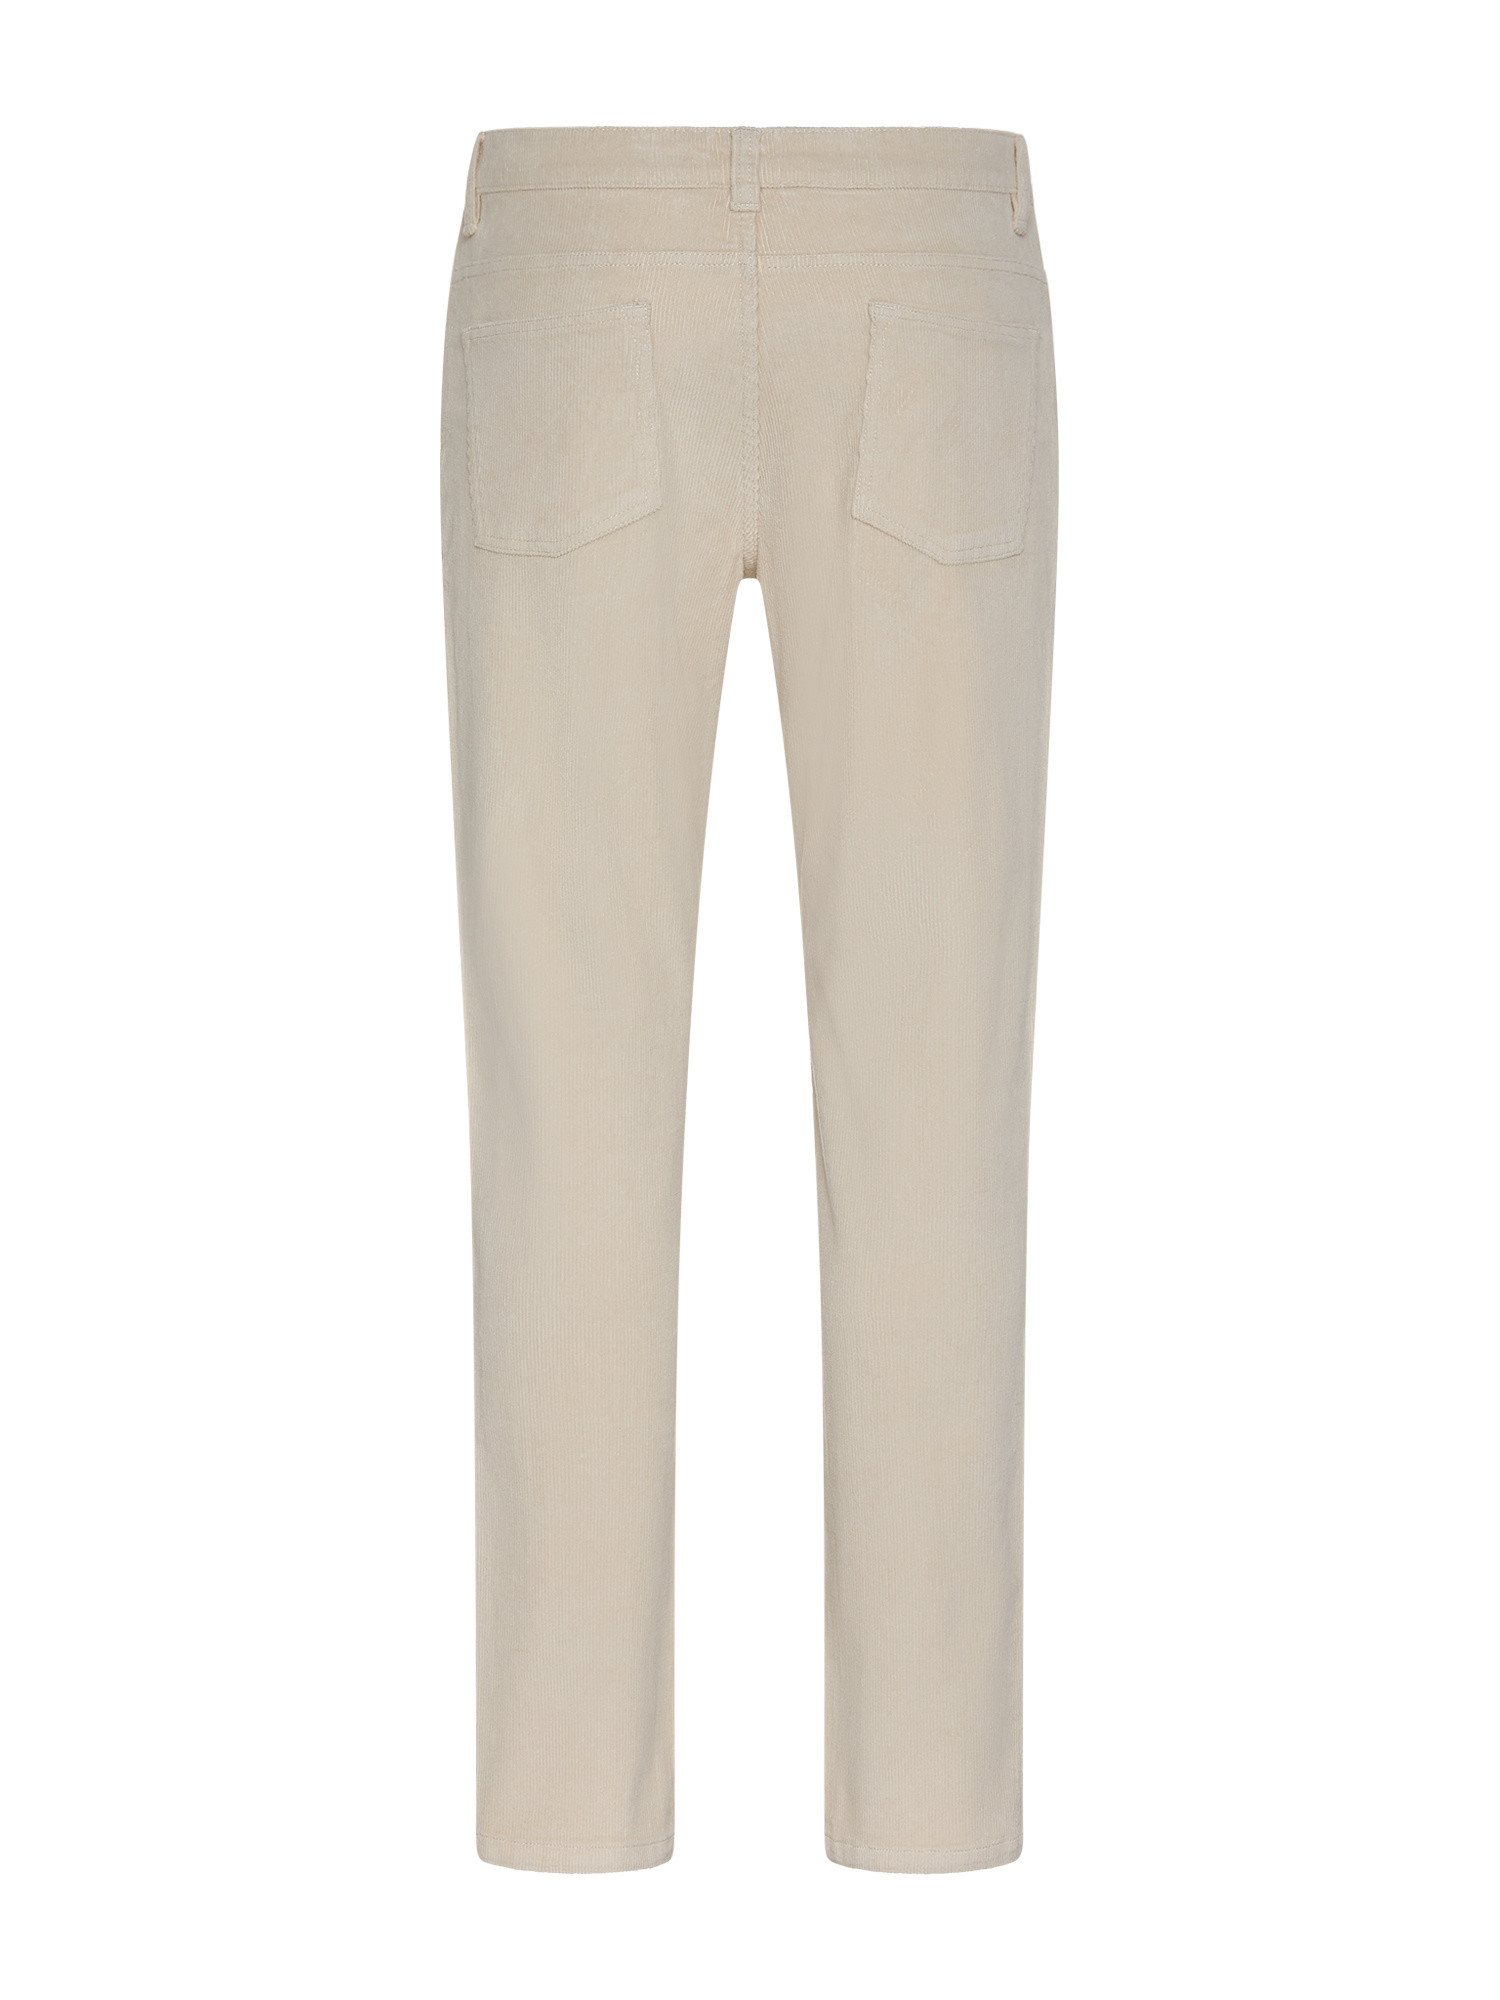 JCT - Pantaloni slim fit in velluto, White Cream, large image number 1